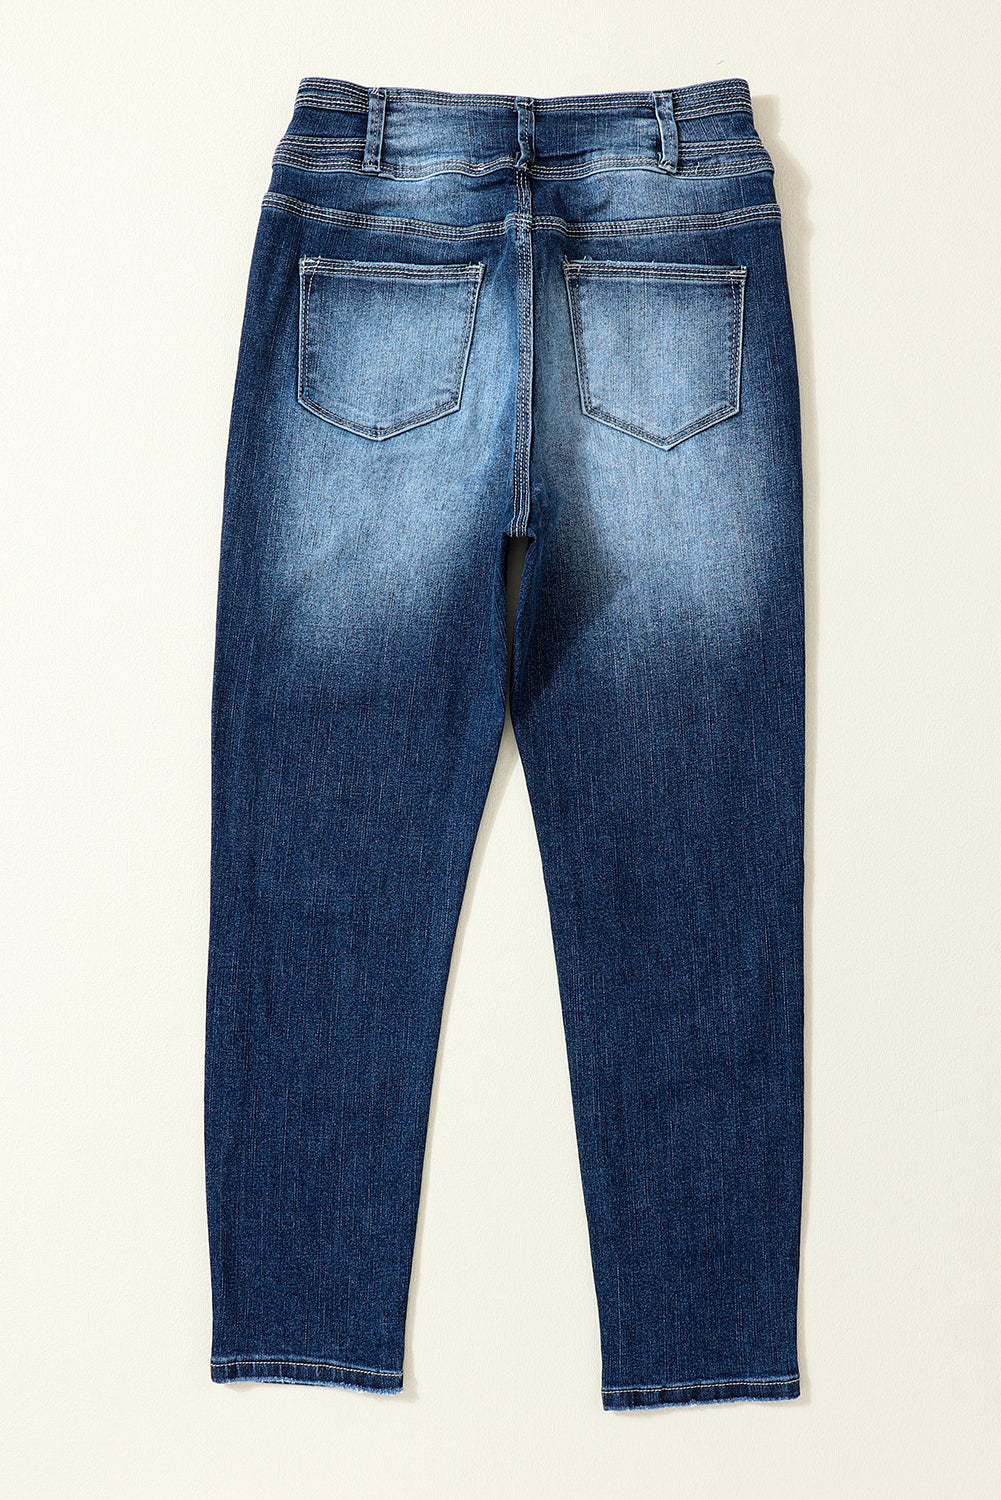 Jeans skinny a vita alta a due bottoni blu lavati vintage